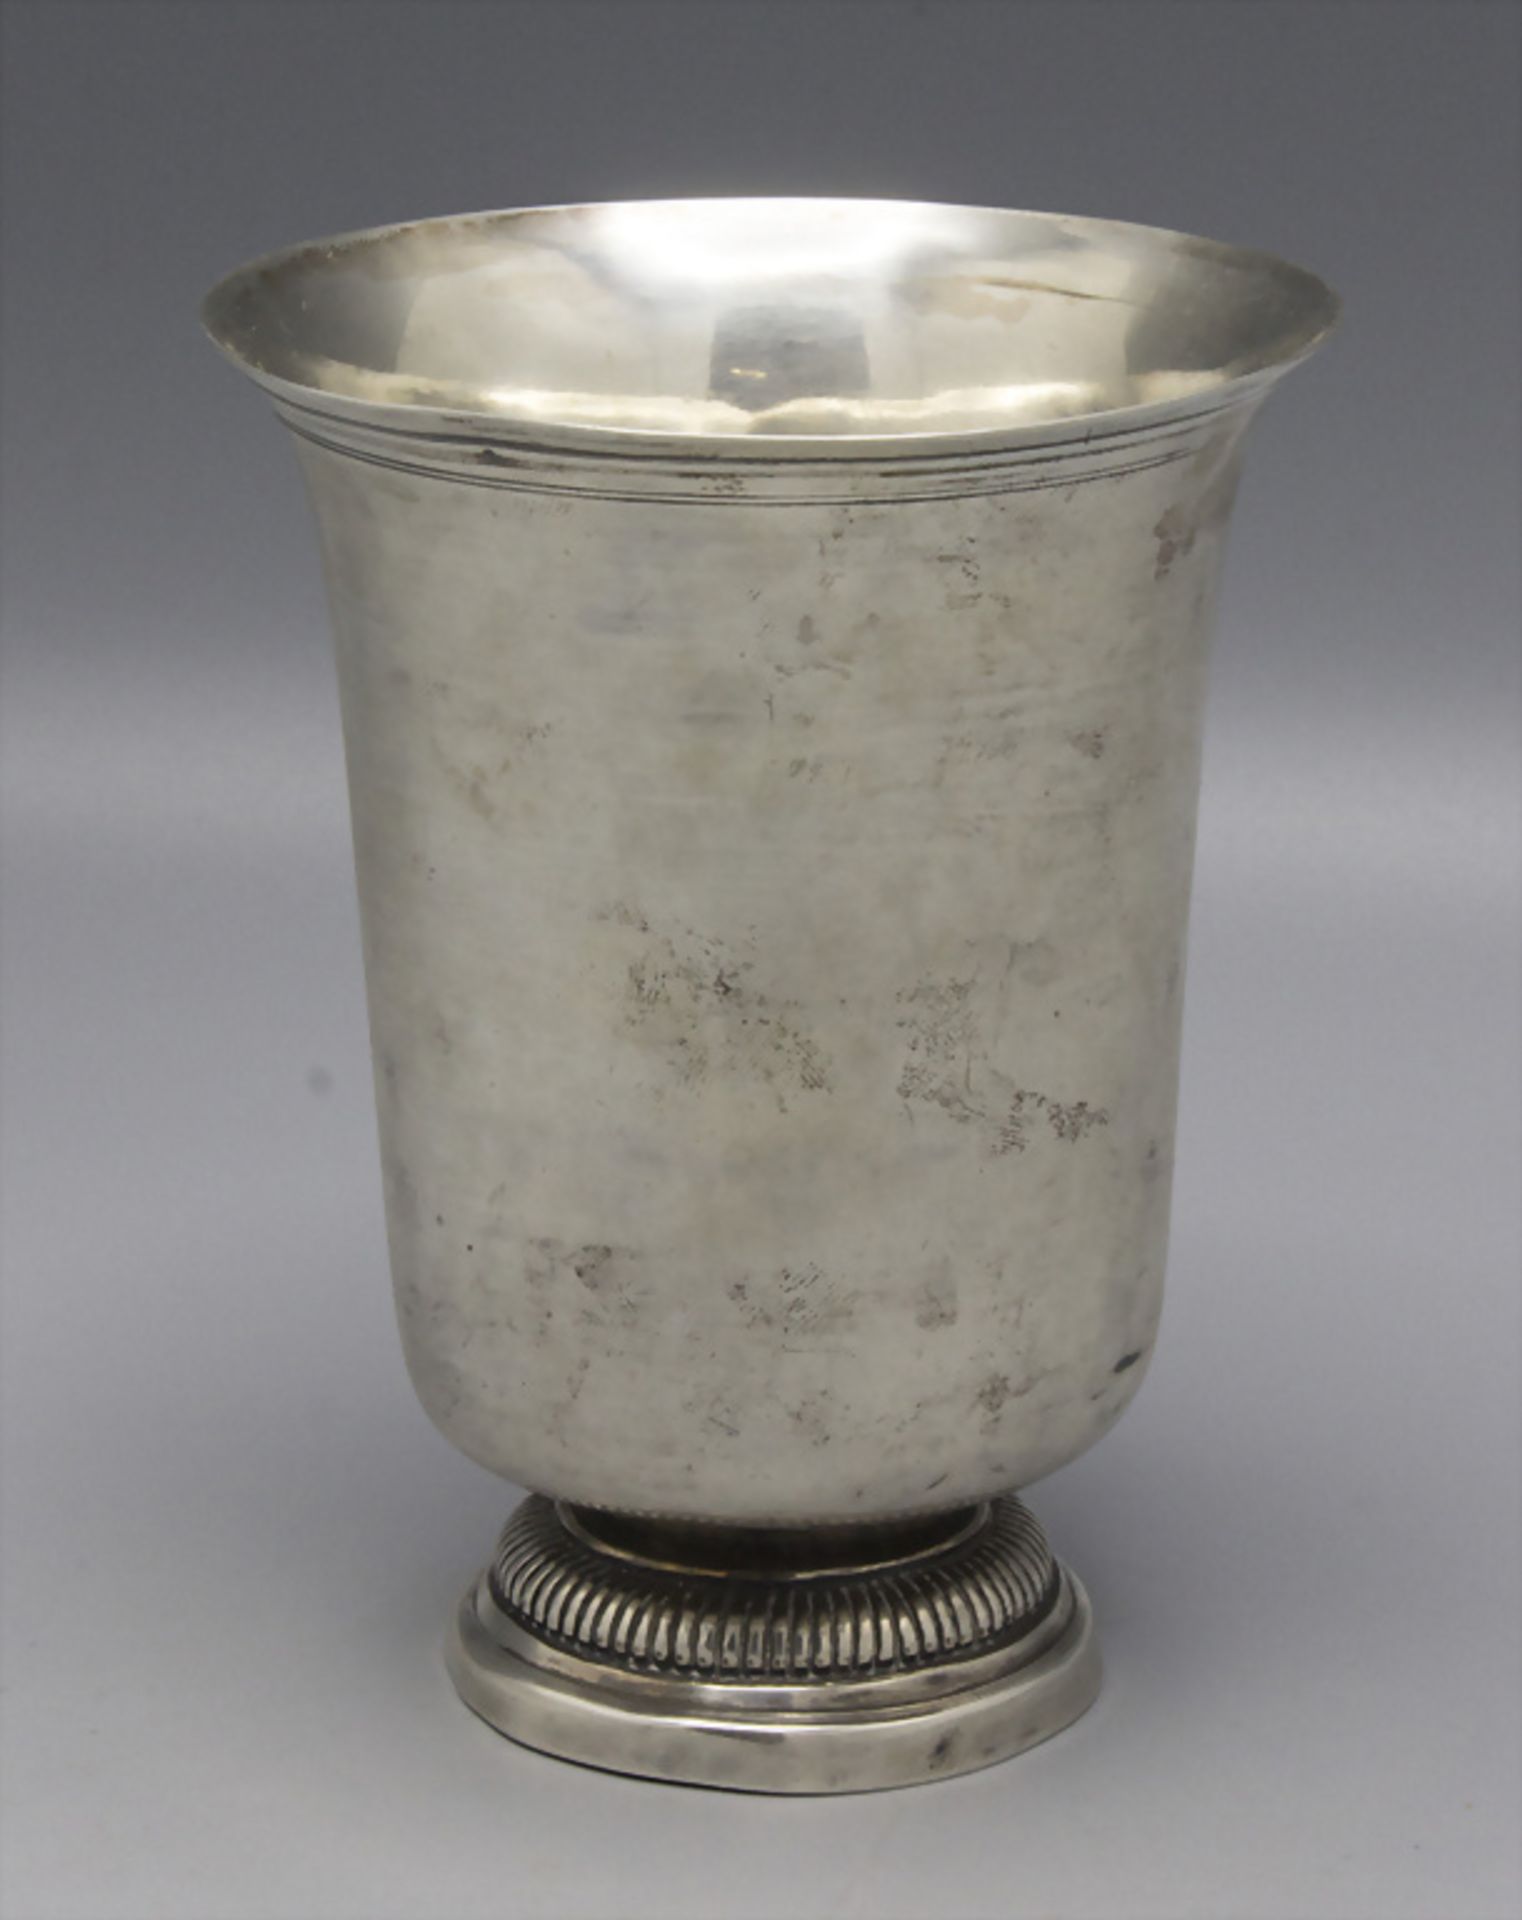 Glockenbecher / A bell shaped silver beaker, Orleans, nach 1798 - Image 2 of 5